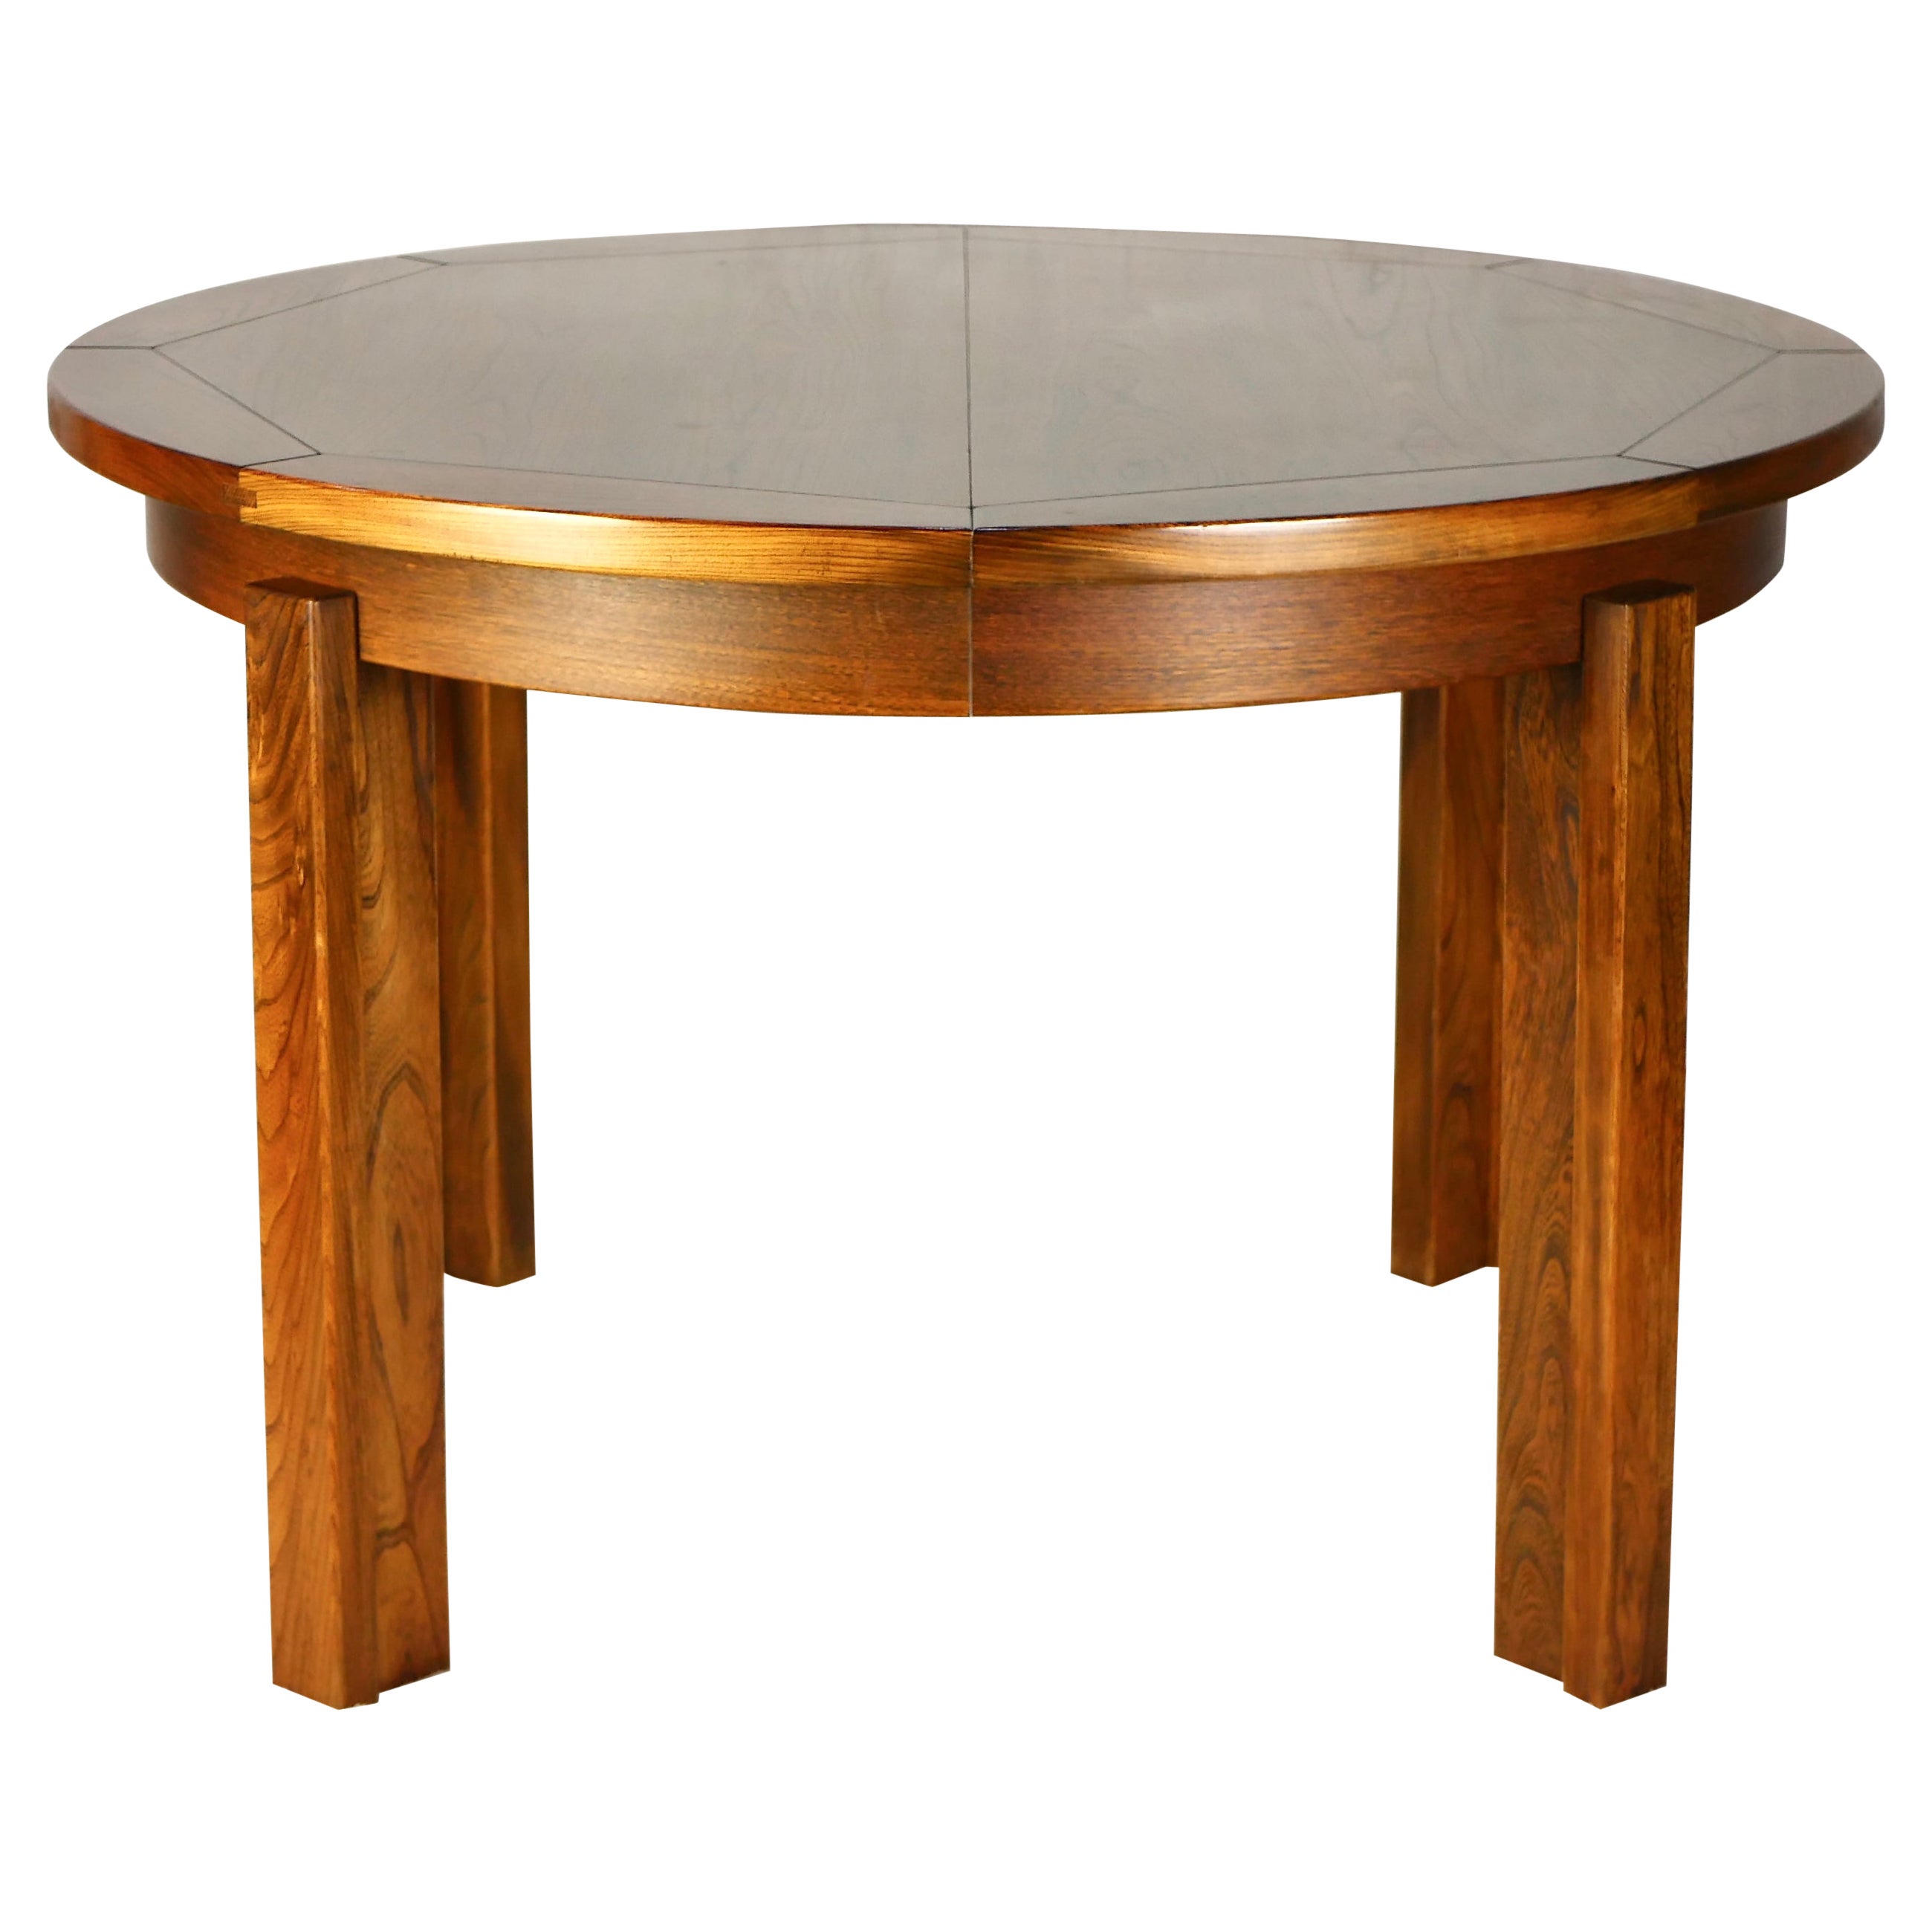 Expandable table (115-203cm) in solid elm by Maison Regain, 1970s, France